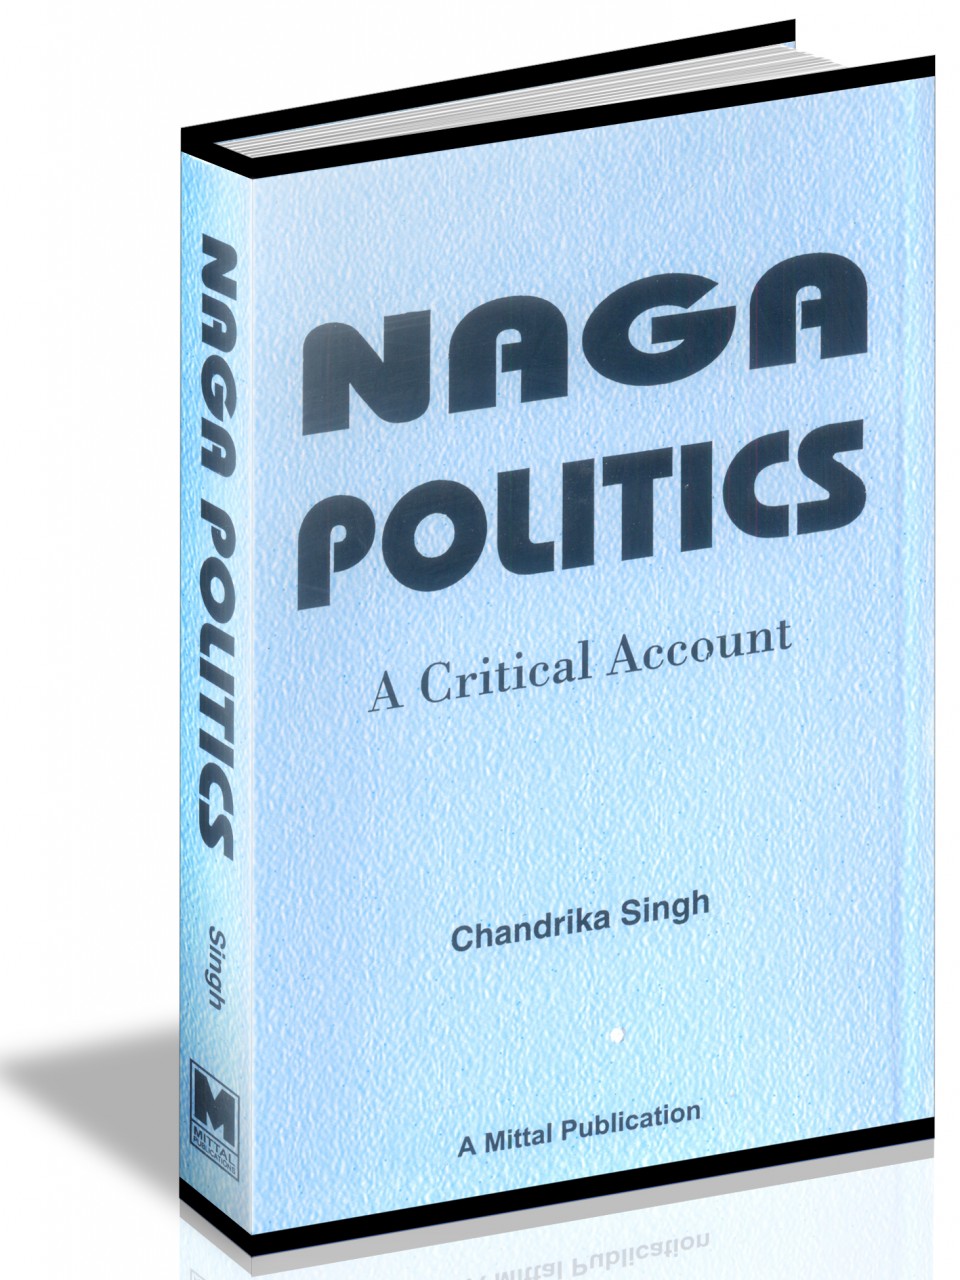 Naga Politics